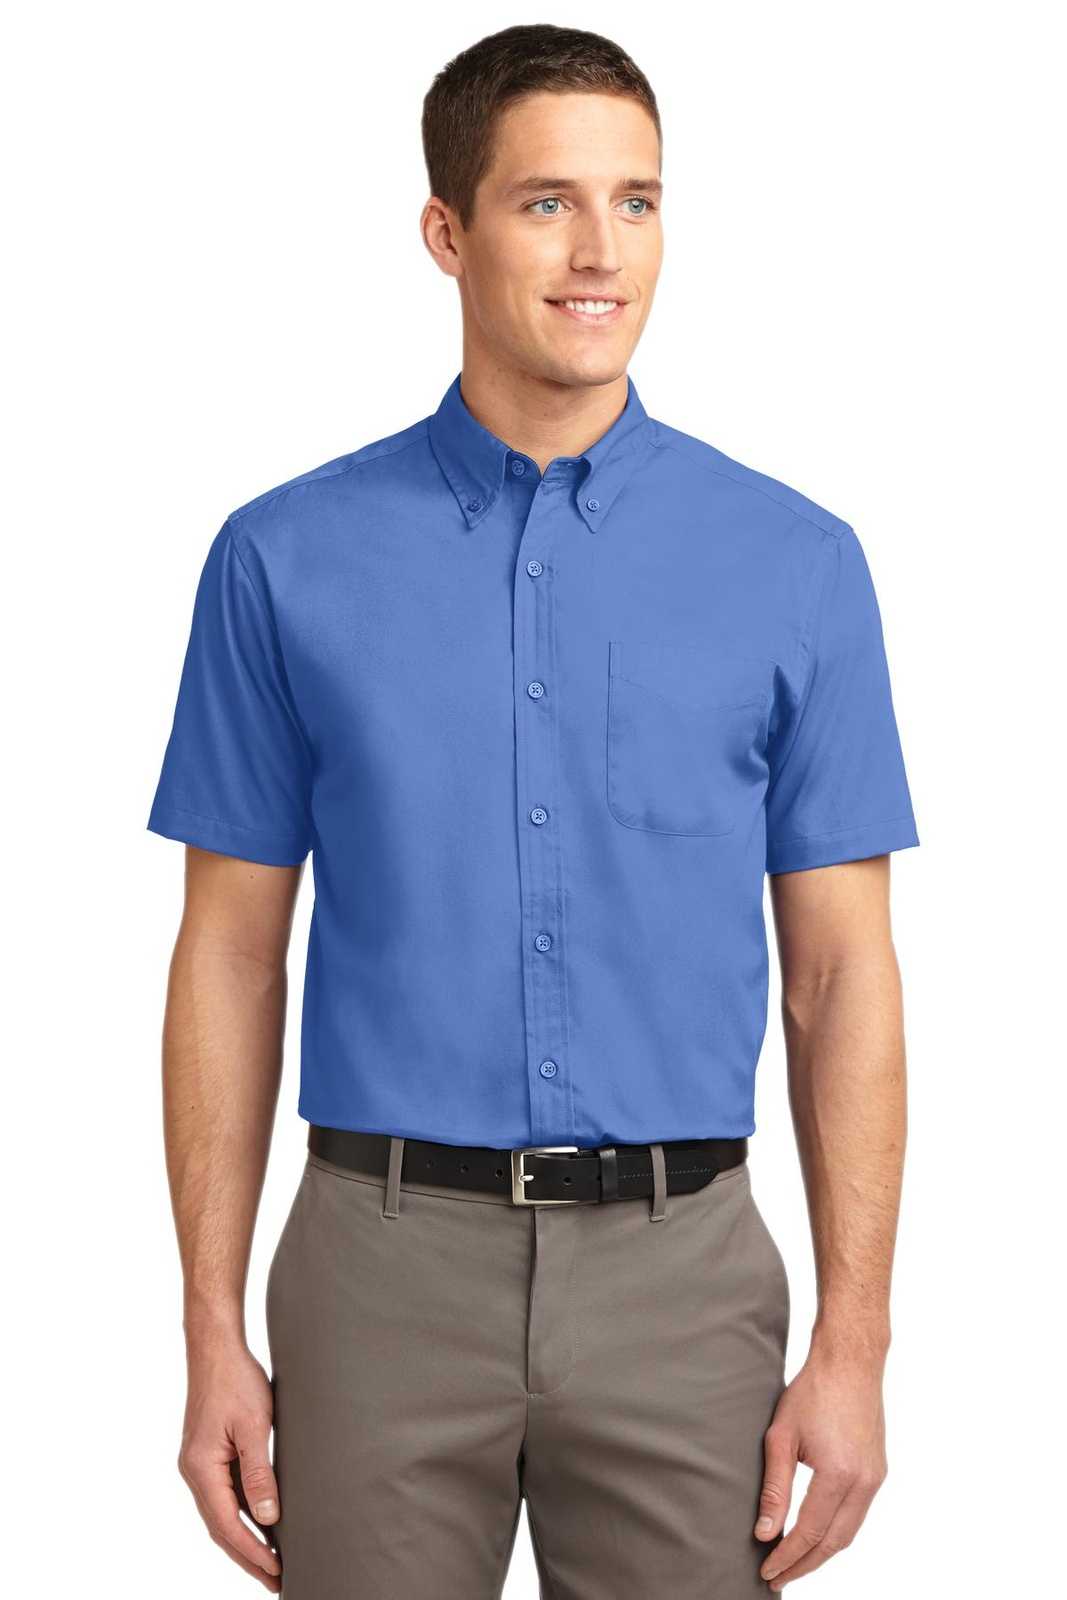 Port Authority S508 Short Sleeve Easy Care Shirt - Ultramarine Blue - HIT a Double - 1